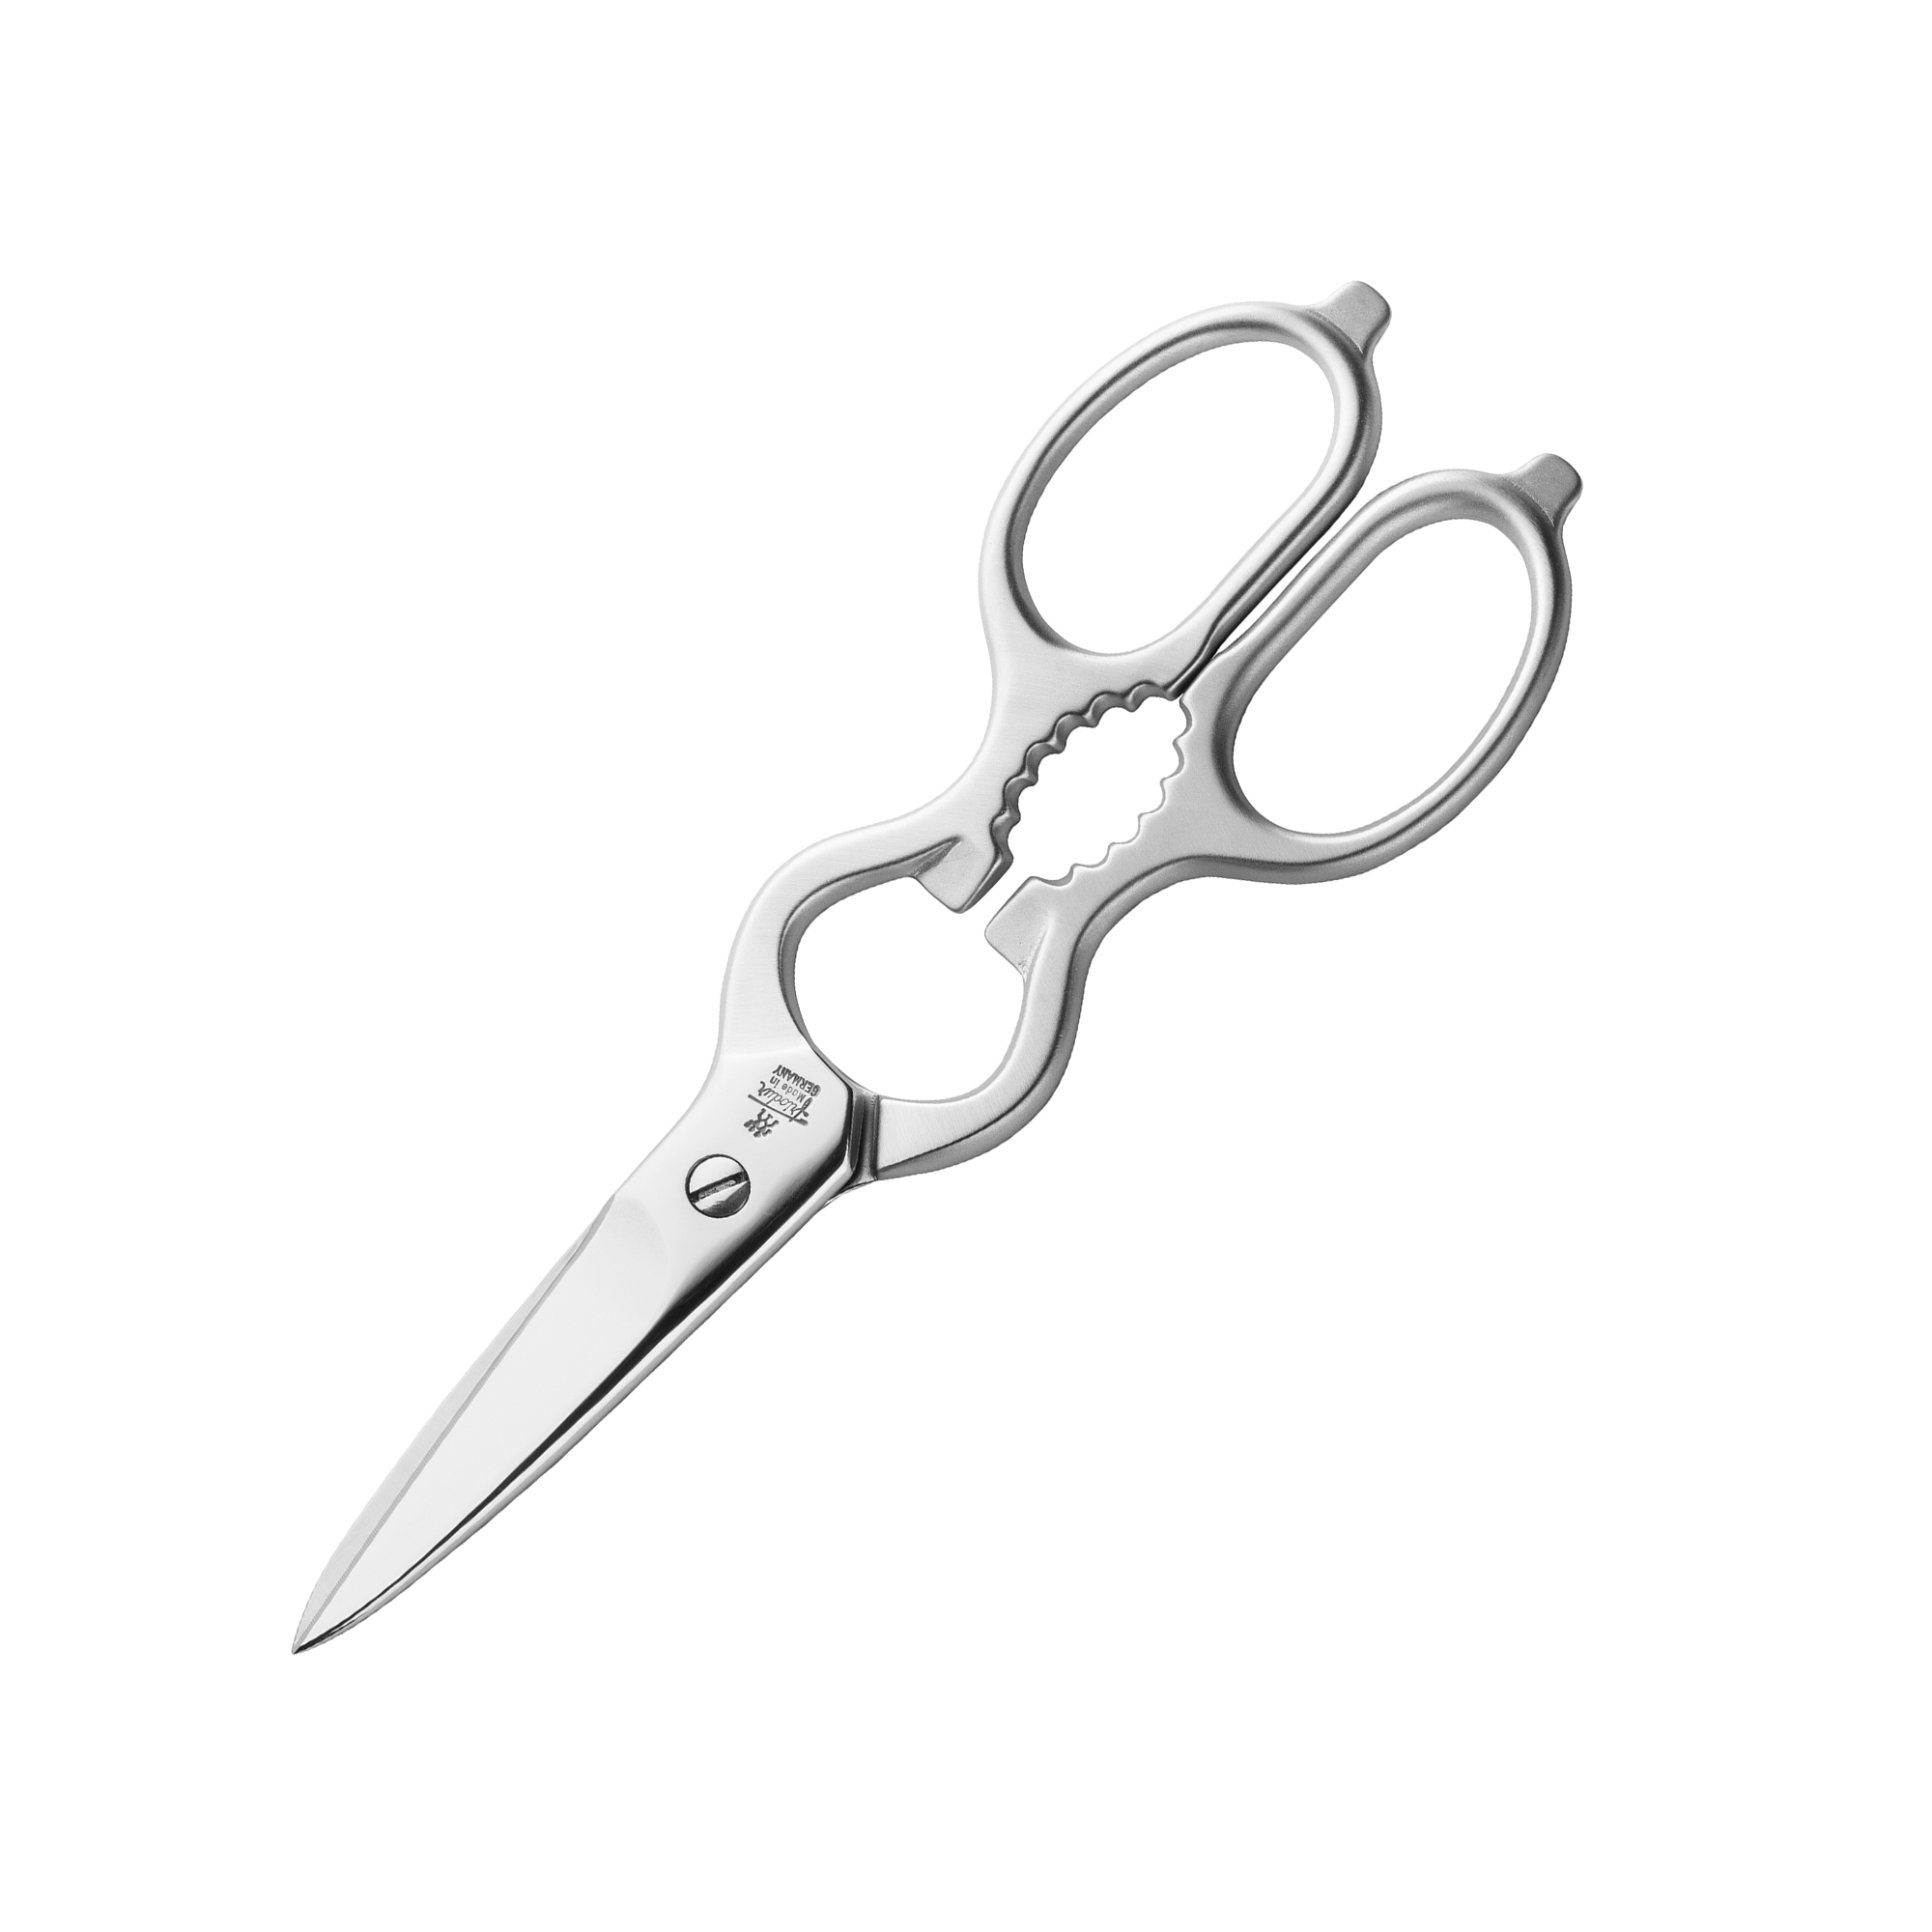 Zwilling - kitchen aid - multi-purpose scissors - 20 cm